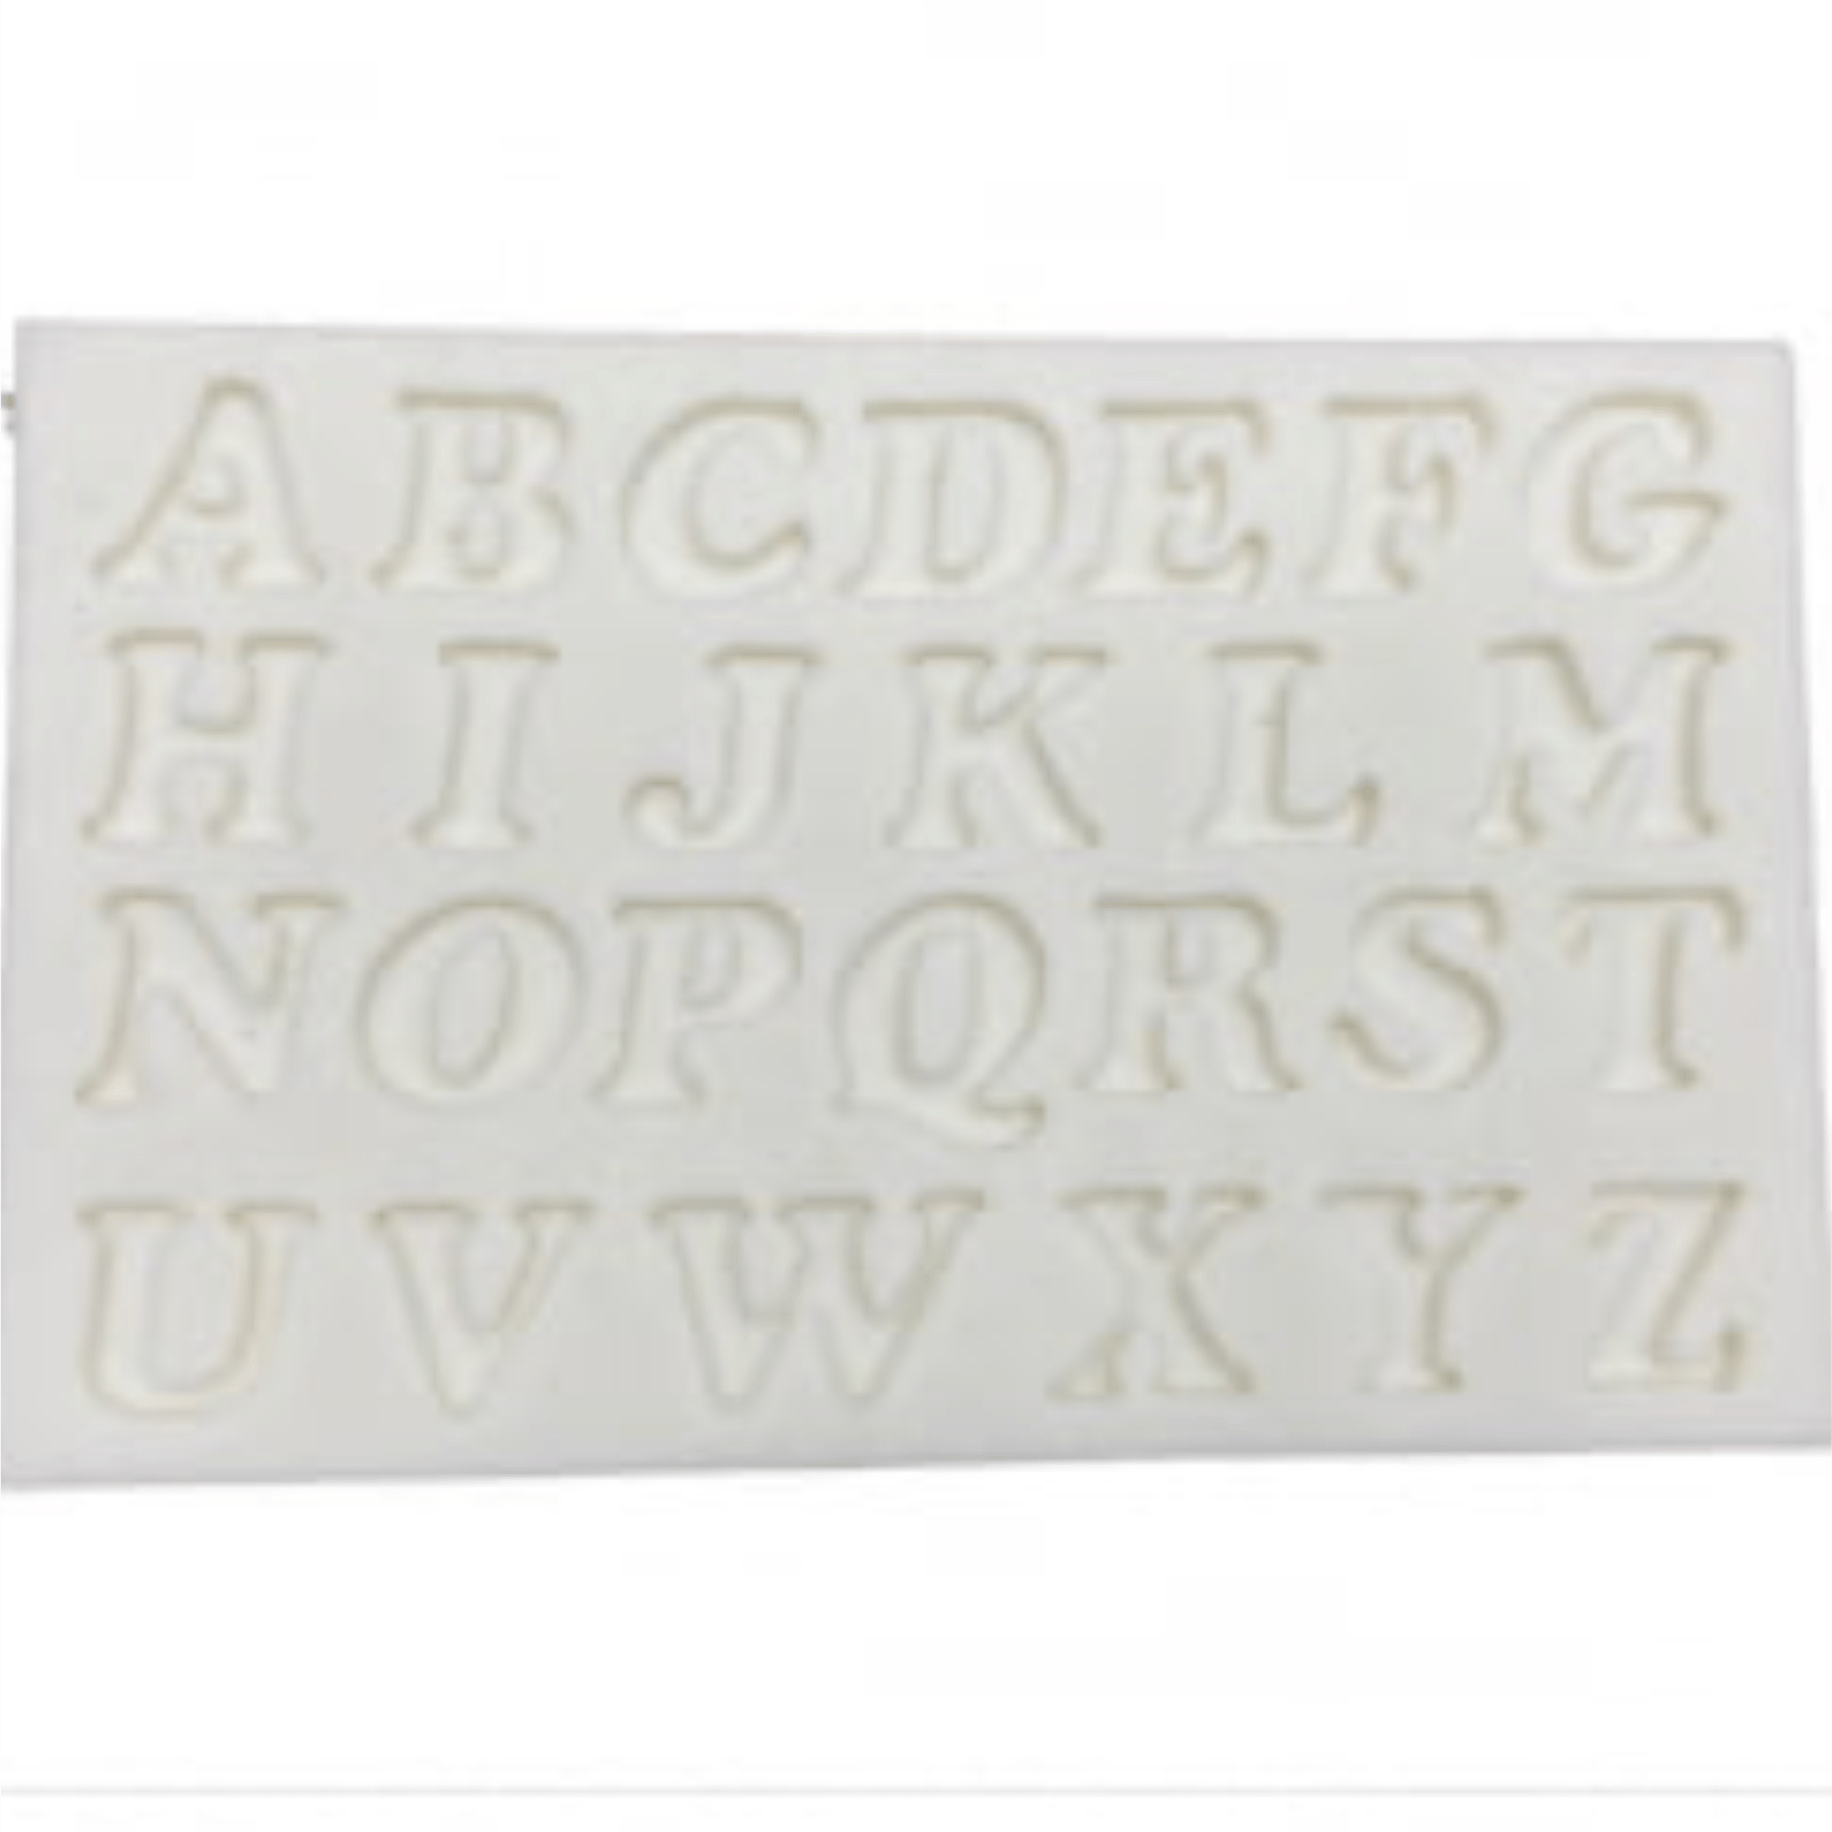 Molde de Silicone em formato de Letras do Alfabeto Maiúsculas